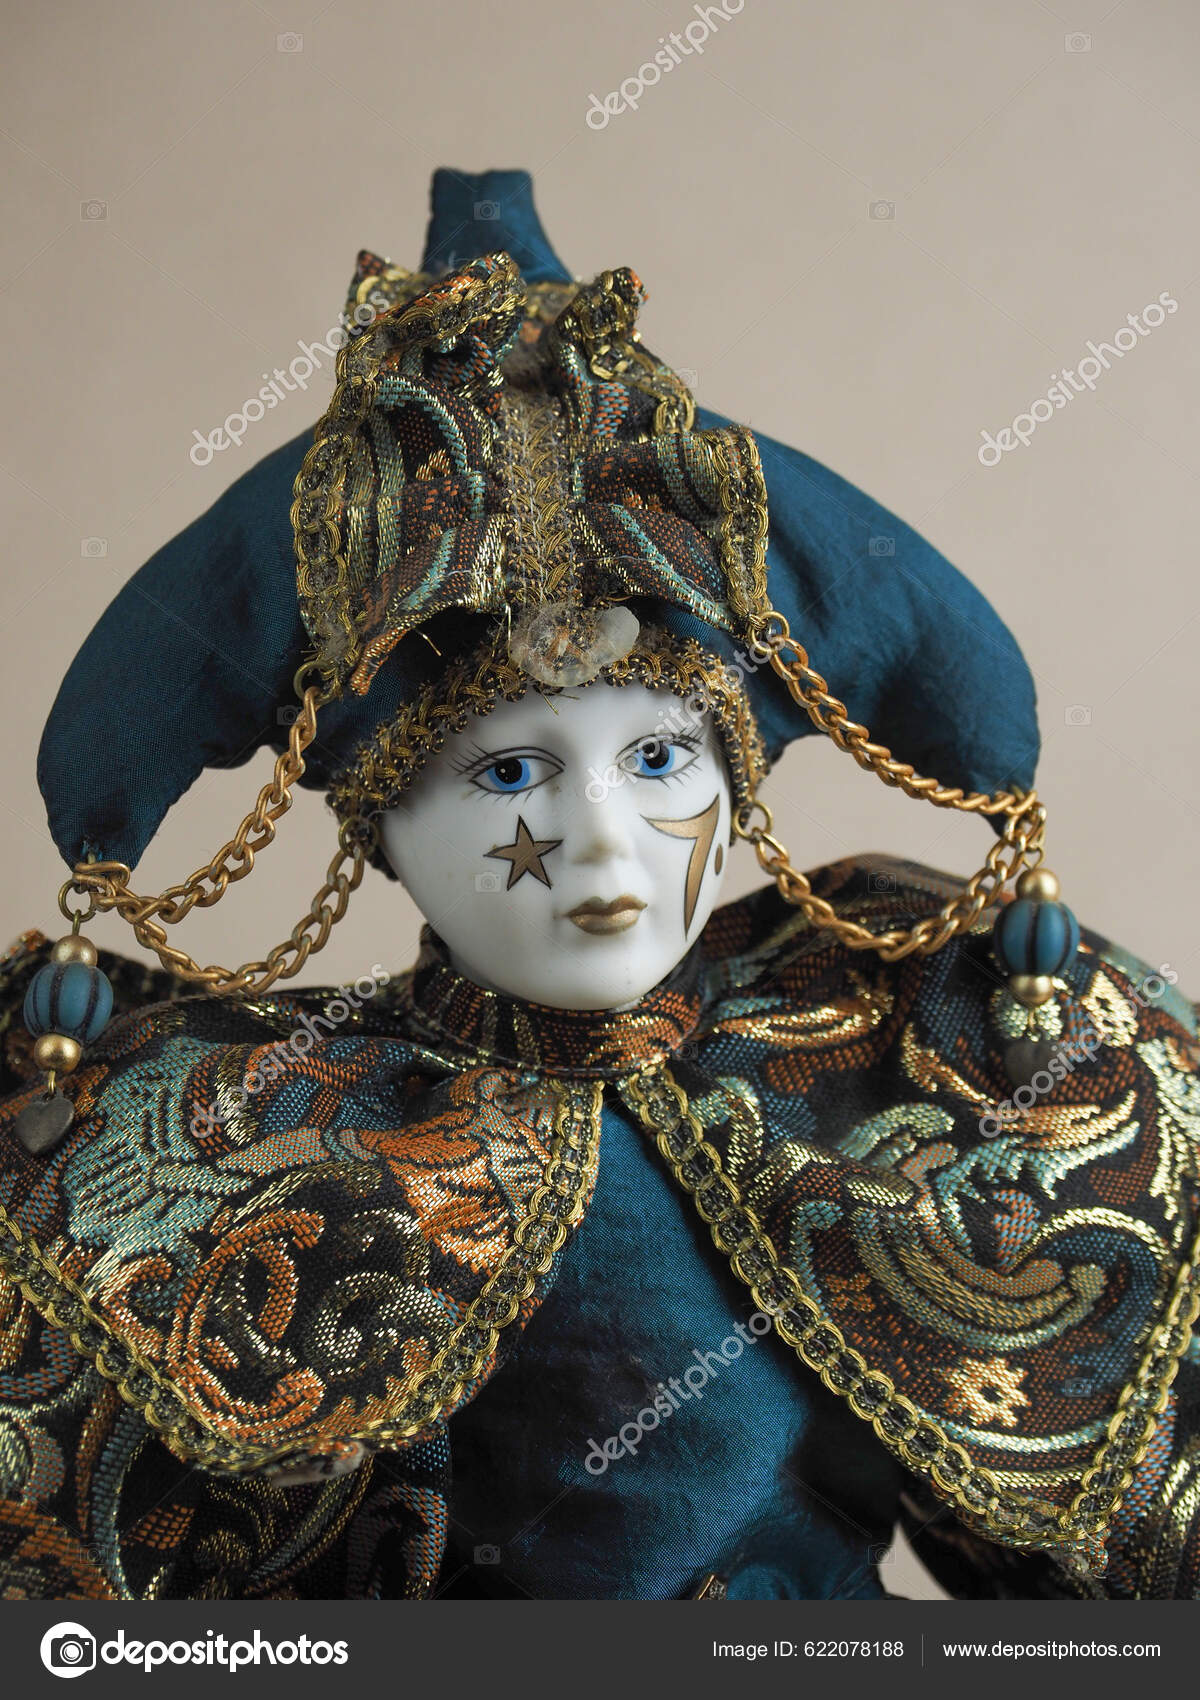 Porcelain Doll Depicting Hero Commedia Del Arte Harlequin – Stock Editorial  Photo © igorgolovniov #622078188